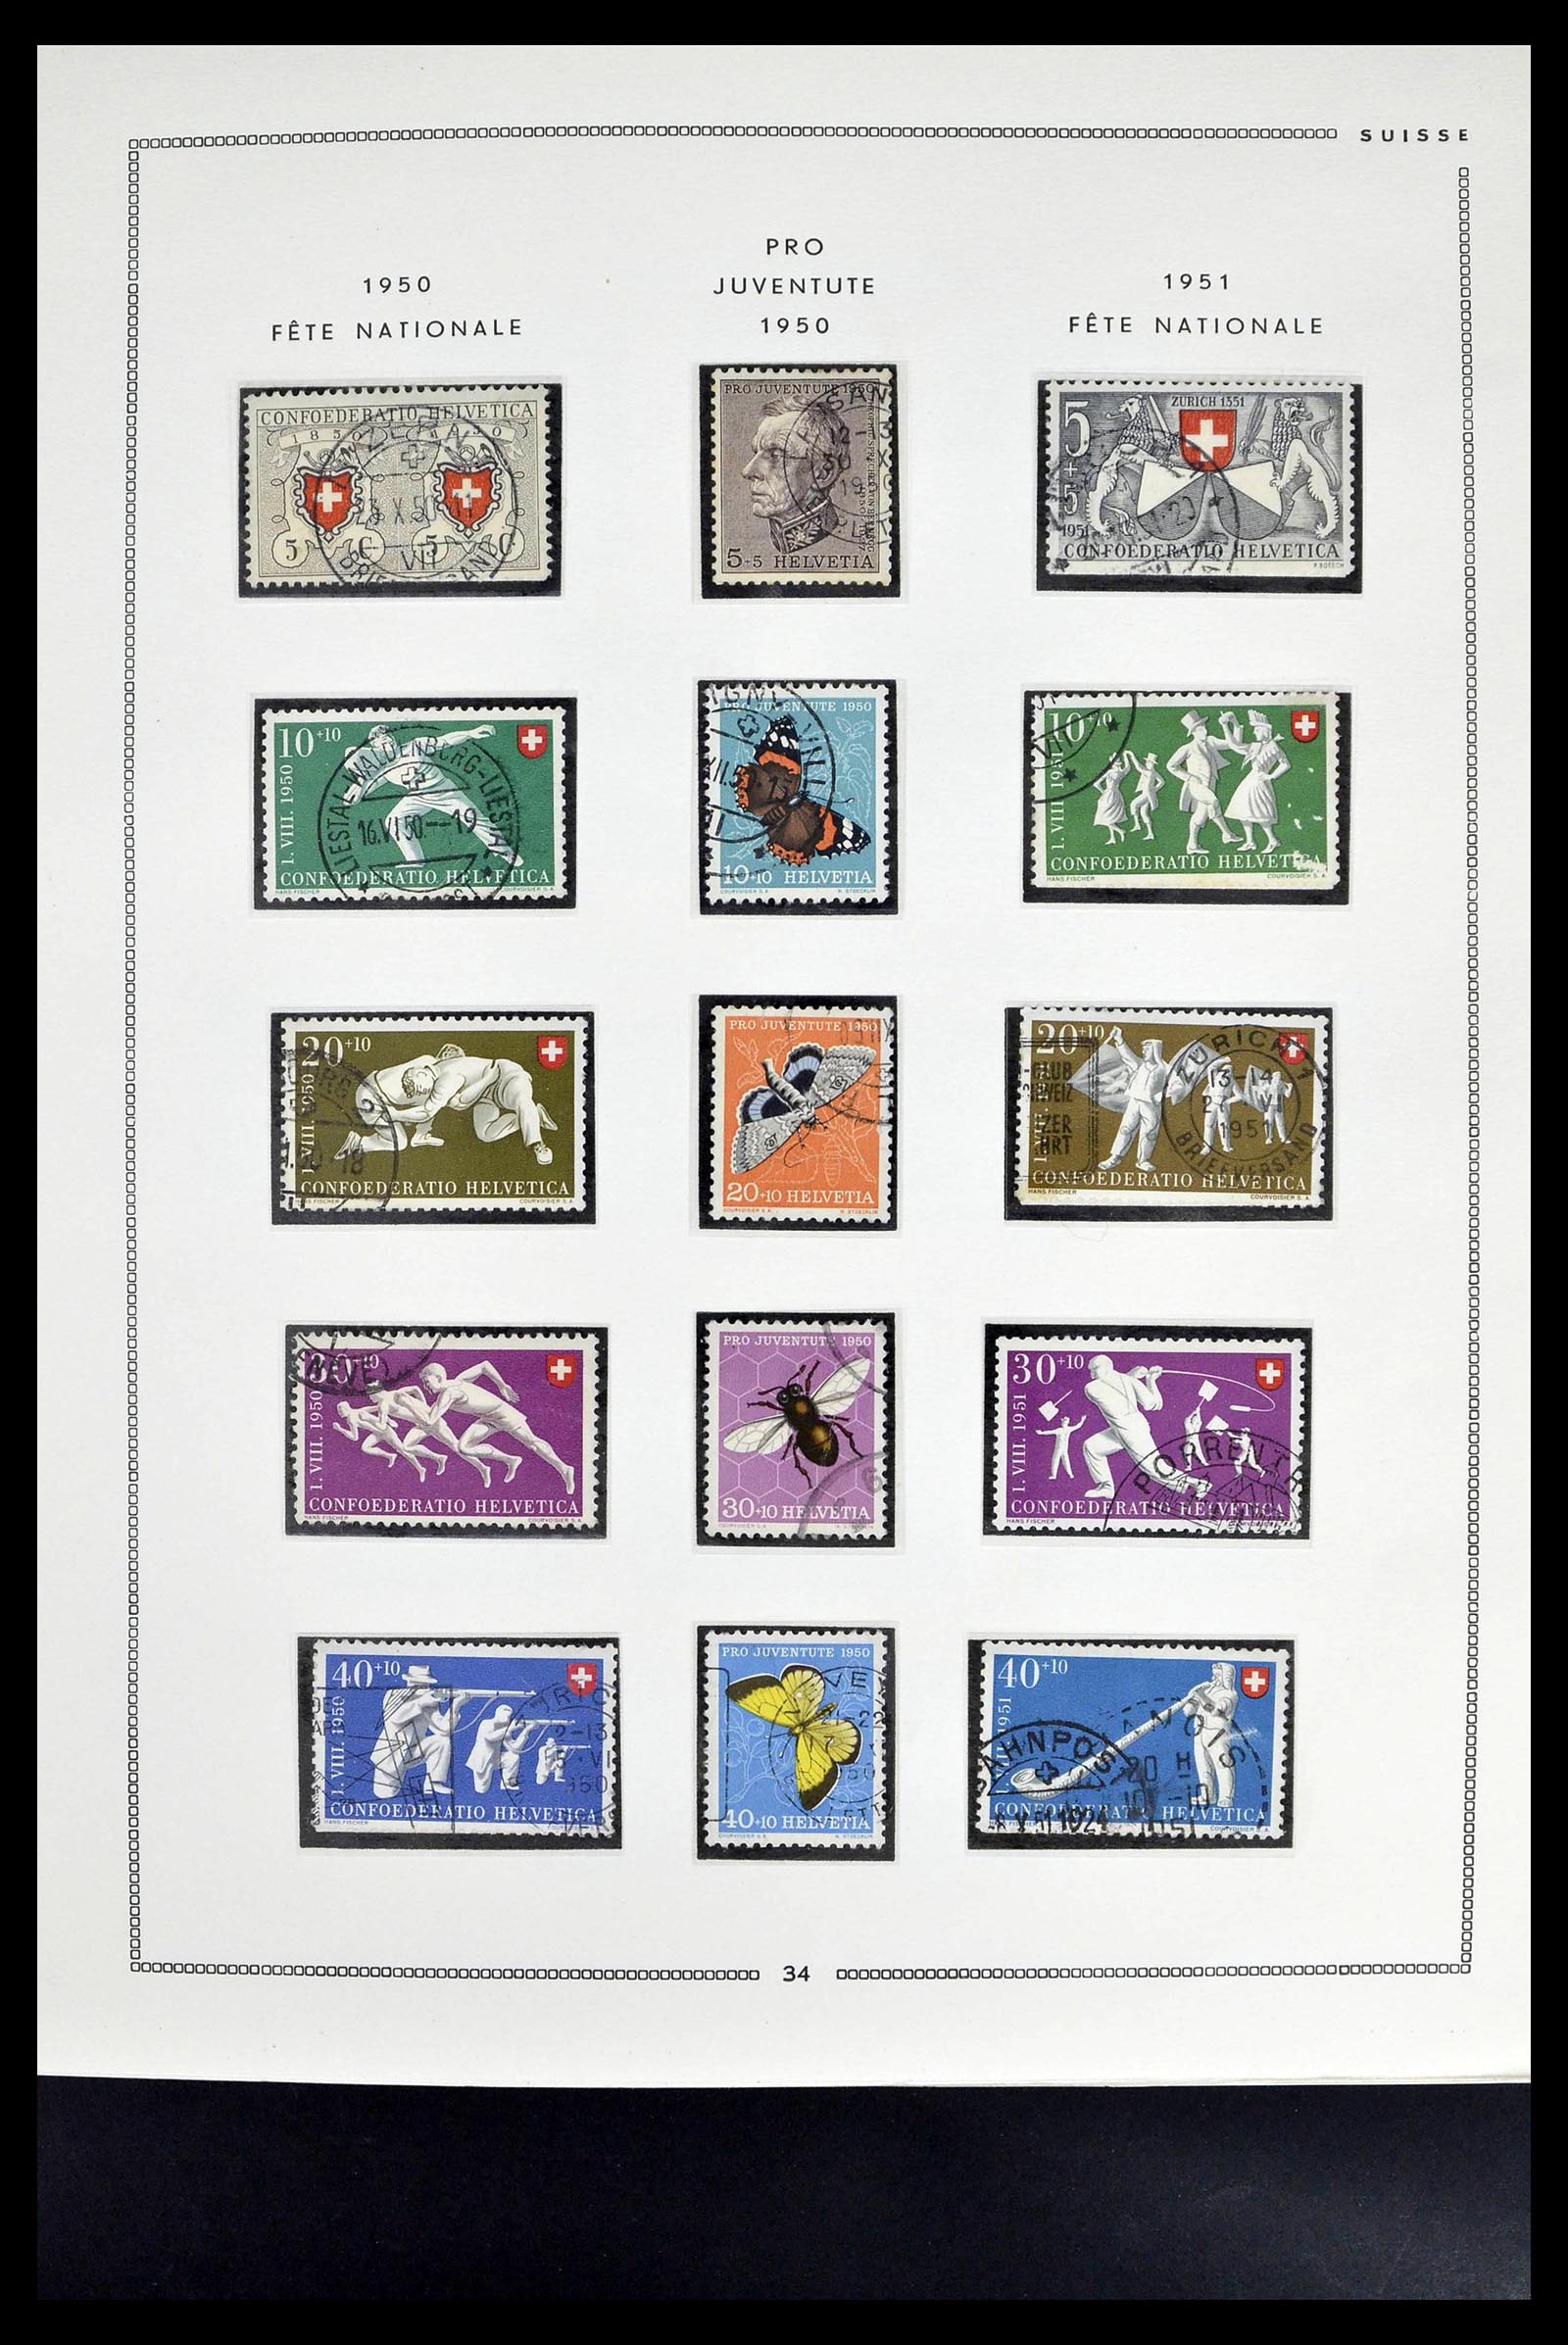 39094 0032 - Stamp collection 39094 Switzerland 1850-2005.